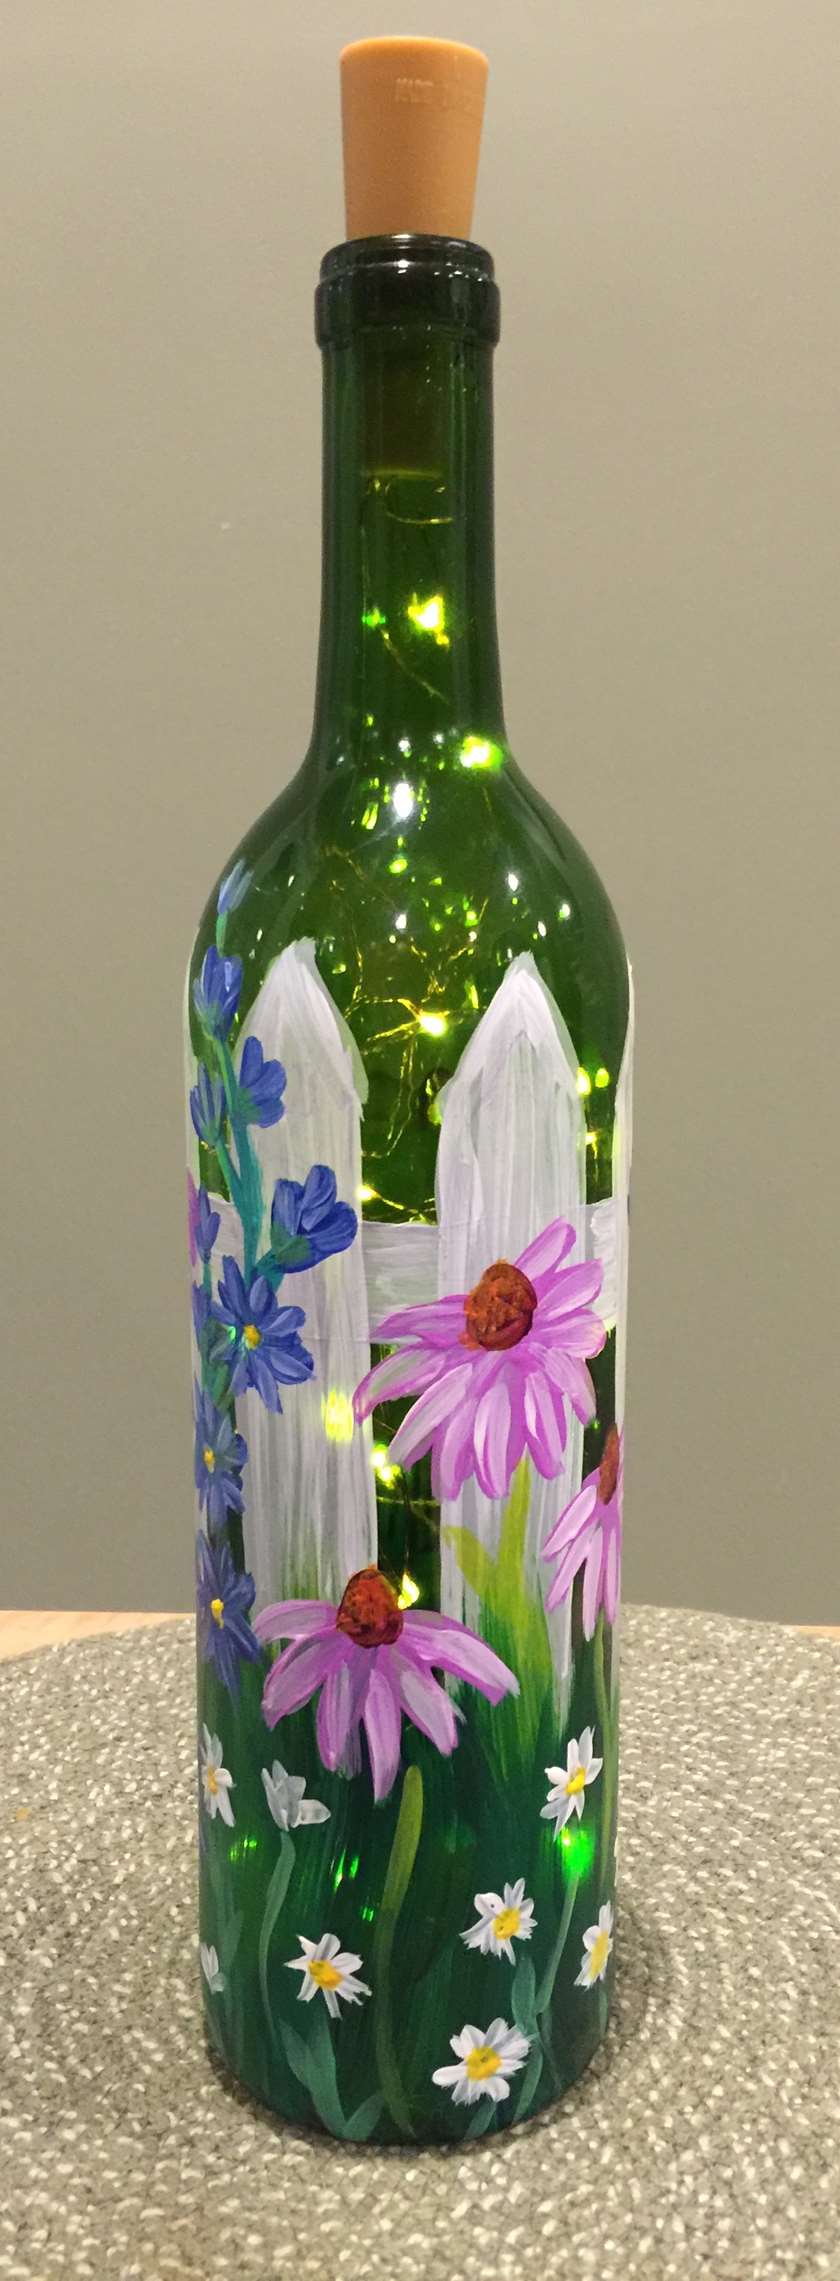 Craft Night: Wine Bottles with Cork Lights!